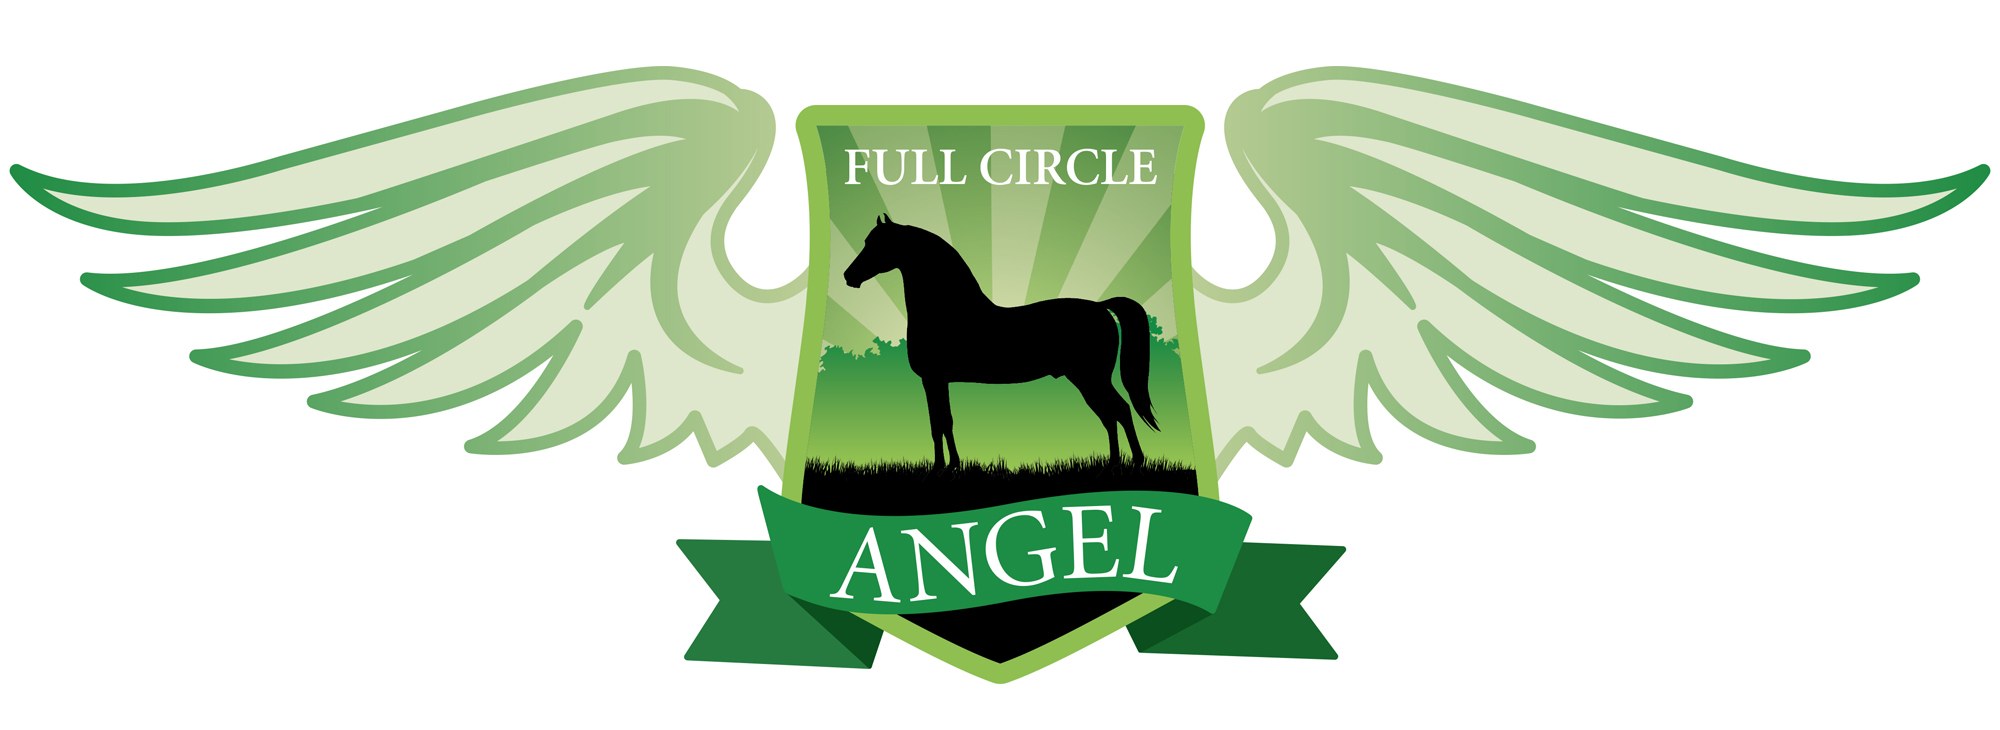 Full Circle Angel Program Logo